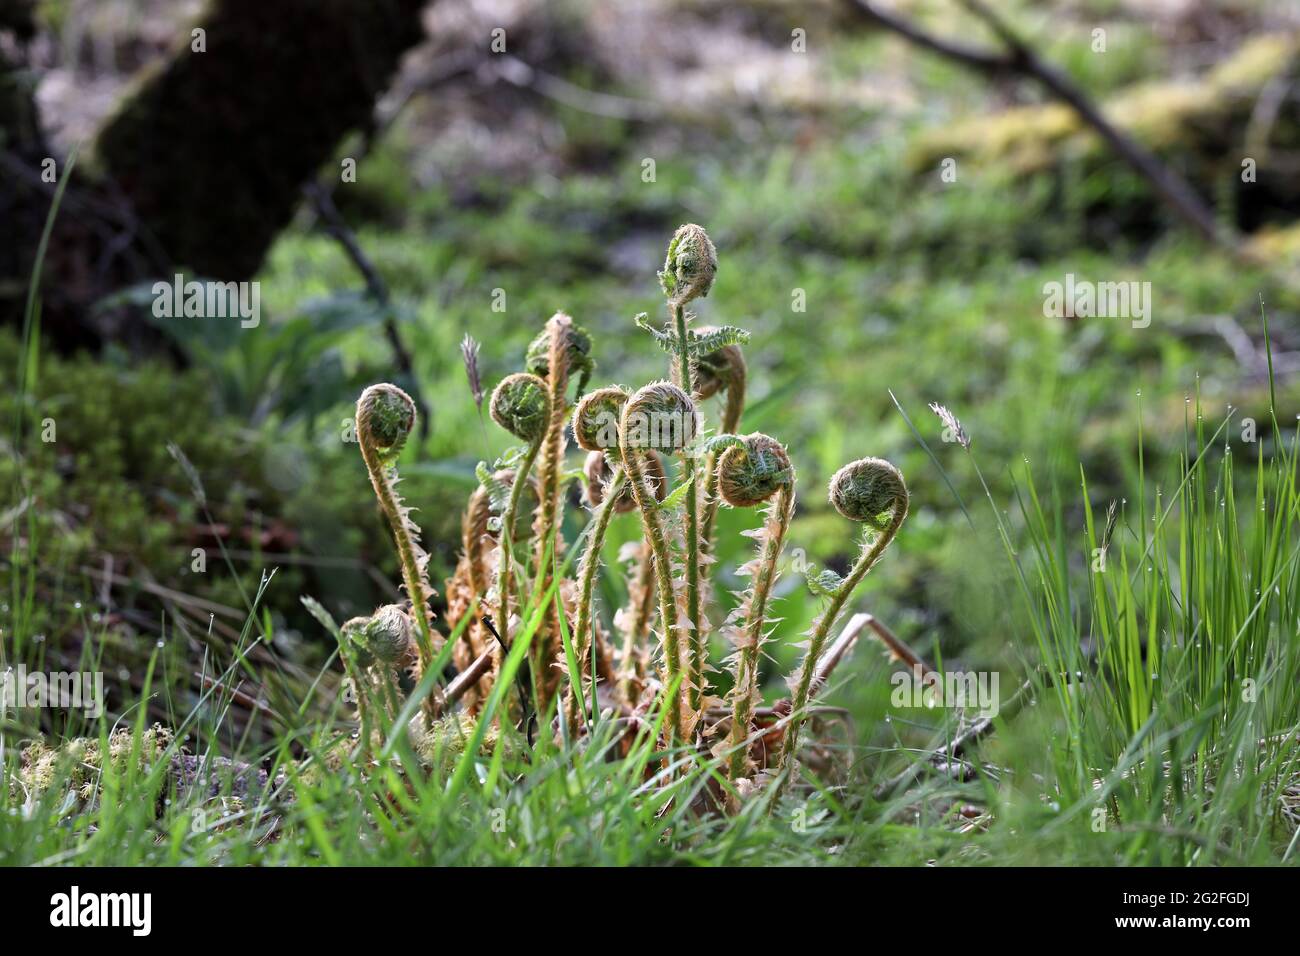 Bracken Fern Fiddleheads (Pteridium aquilinum) Unfurling, UK Stock Photo